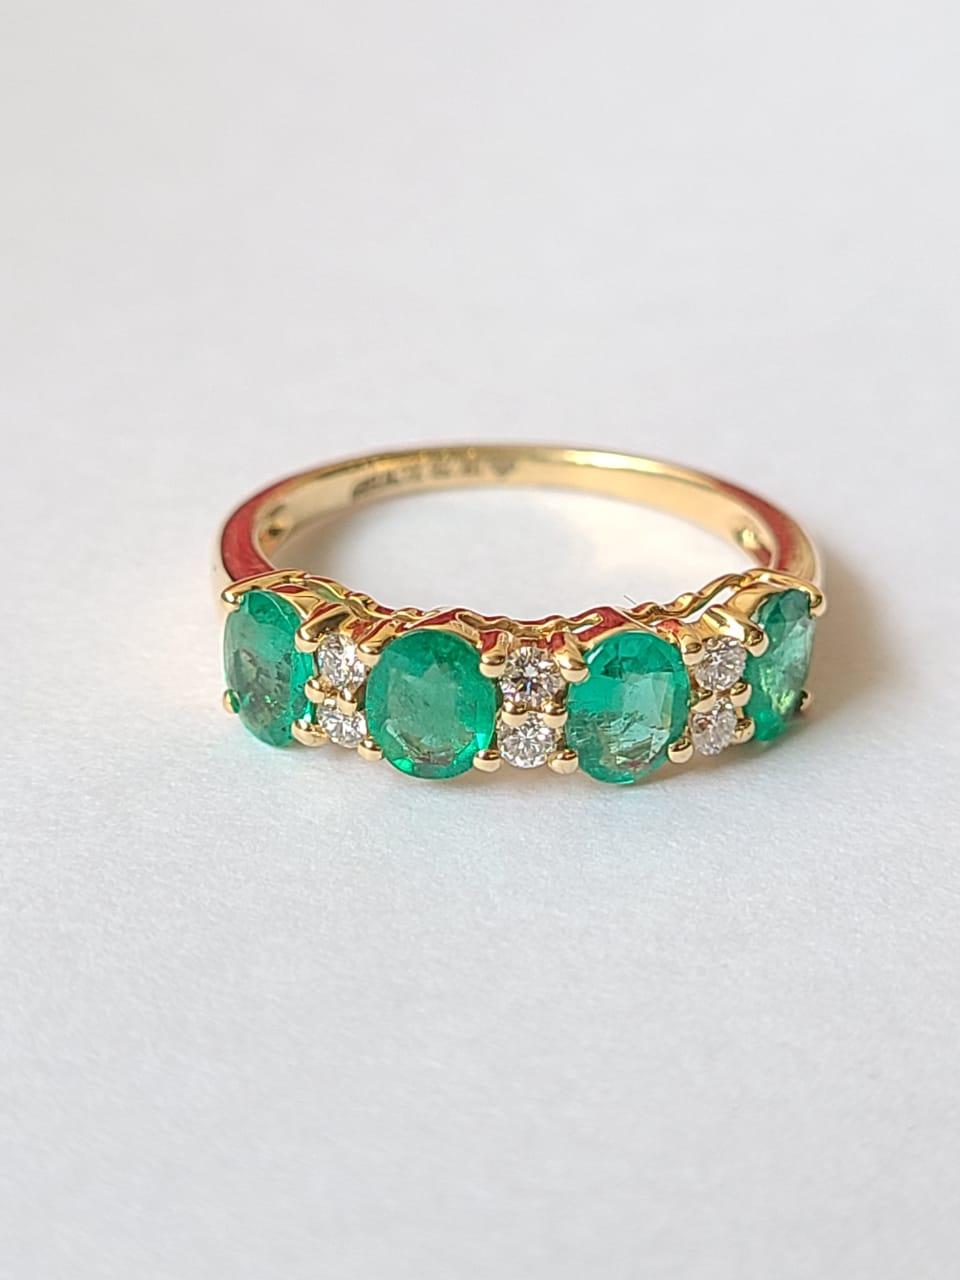 Oval Cut Natural, Zambian Emerald & Diamonds Band / Wedding Ring Set in 18K Yellow Gold